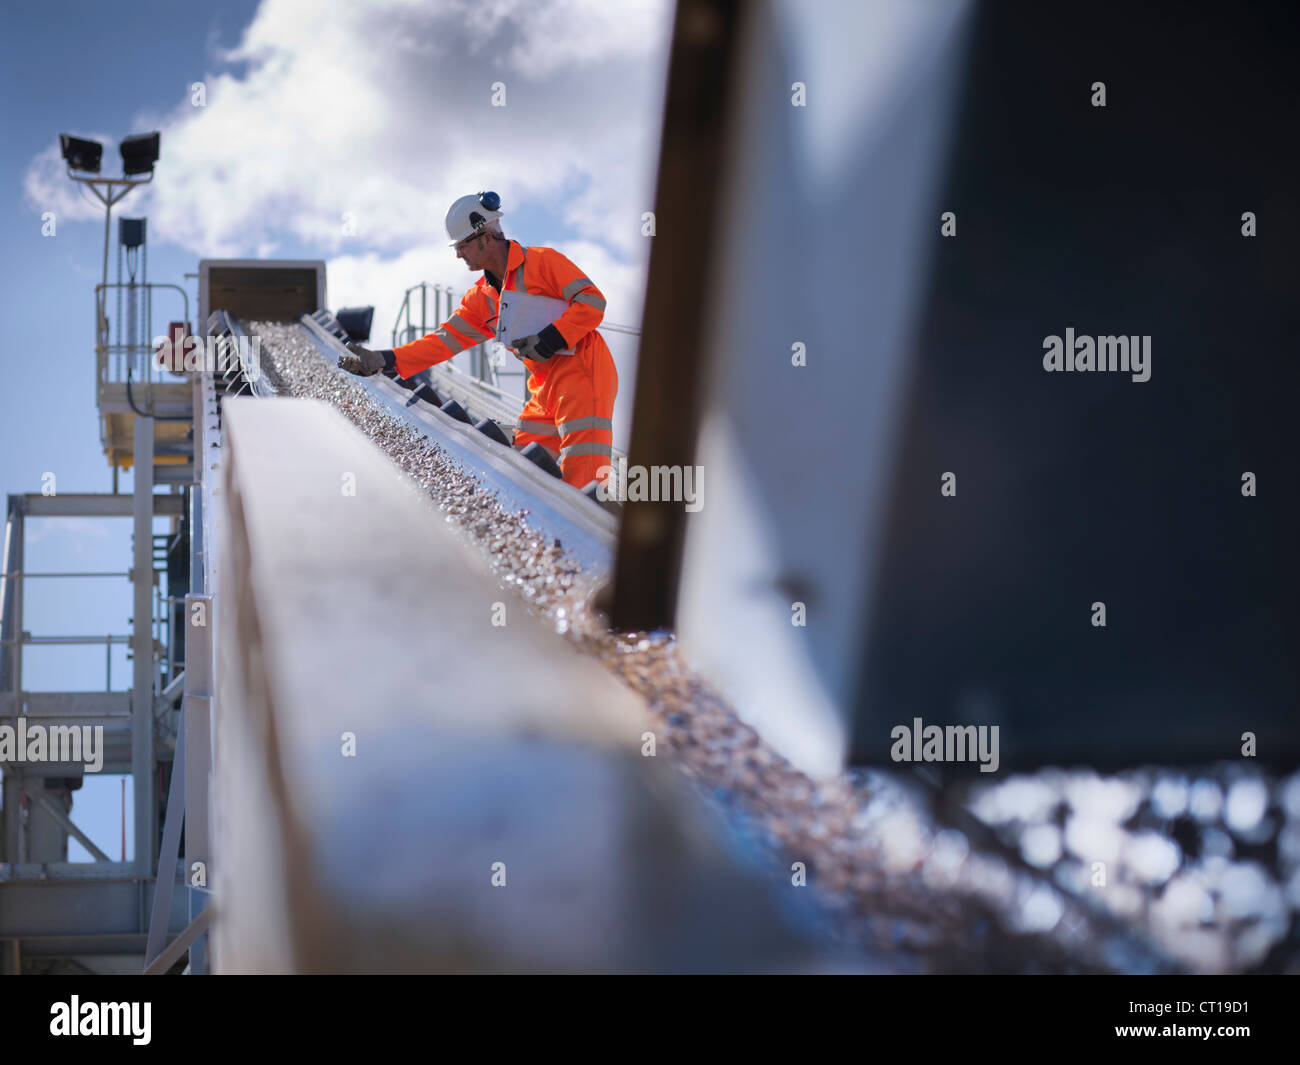 Worker examining stones on conveyor belt Stock Photo